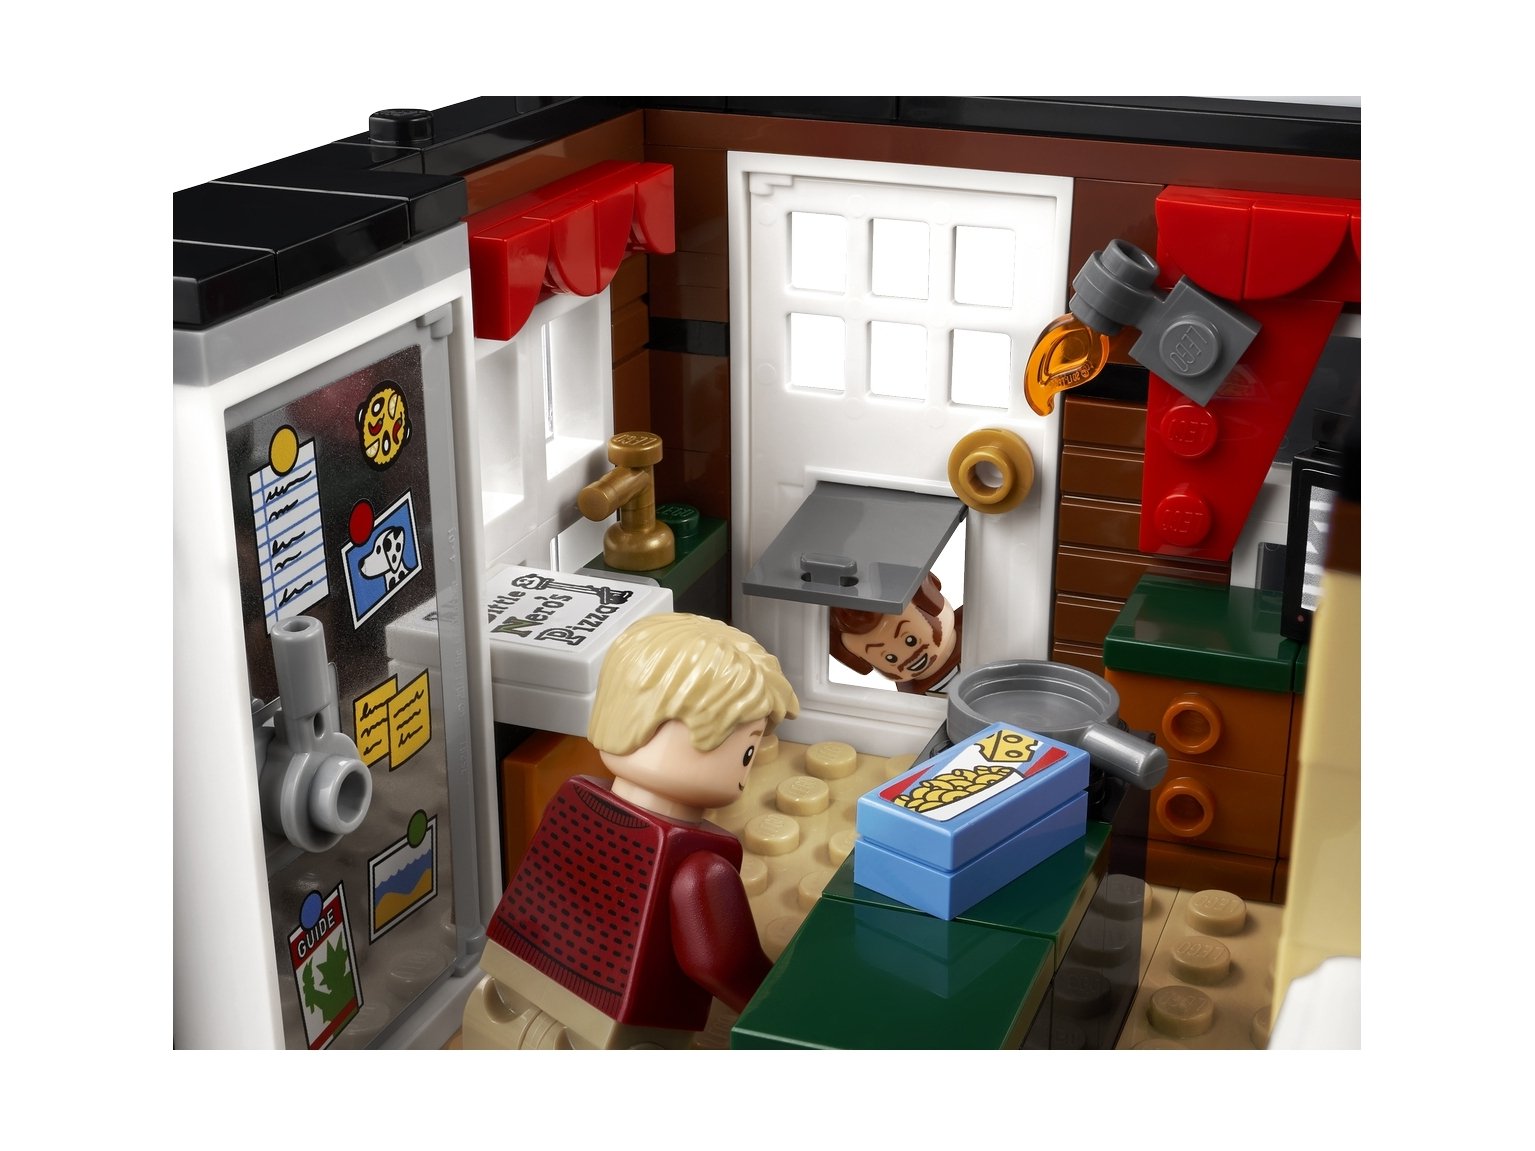 LEGO Ideas Sam w domu 21330